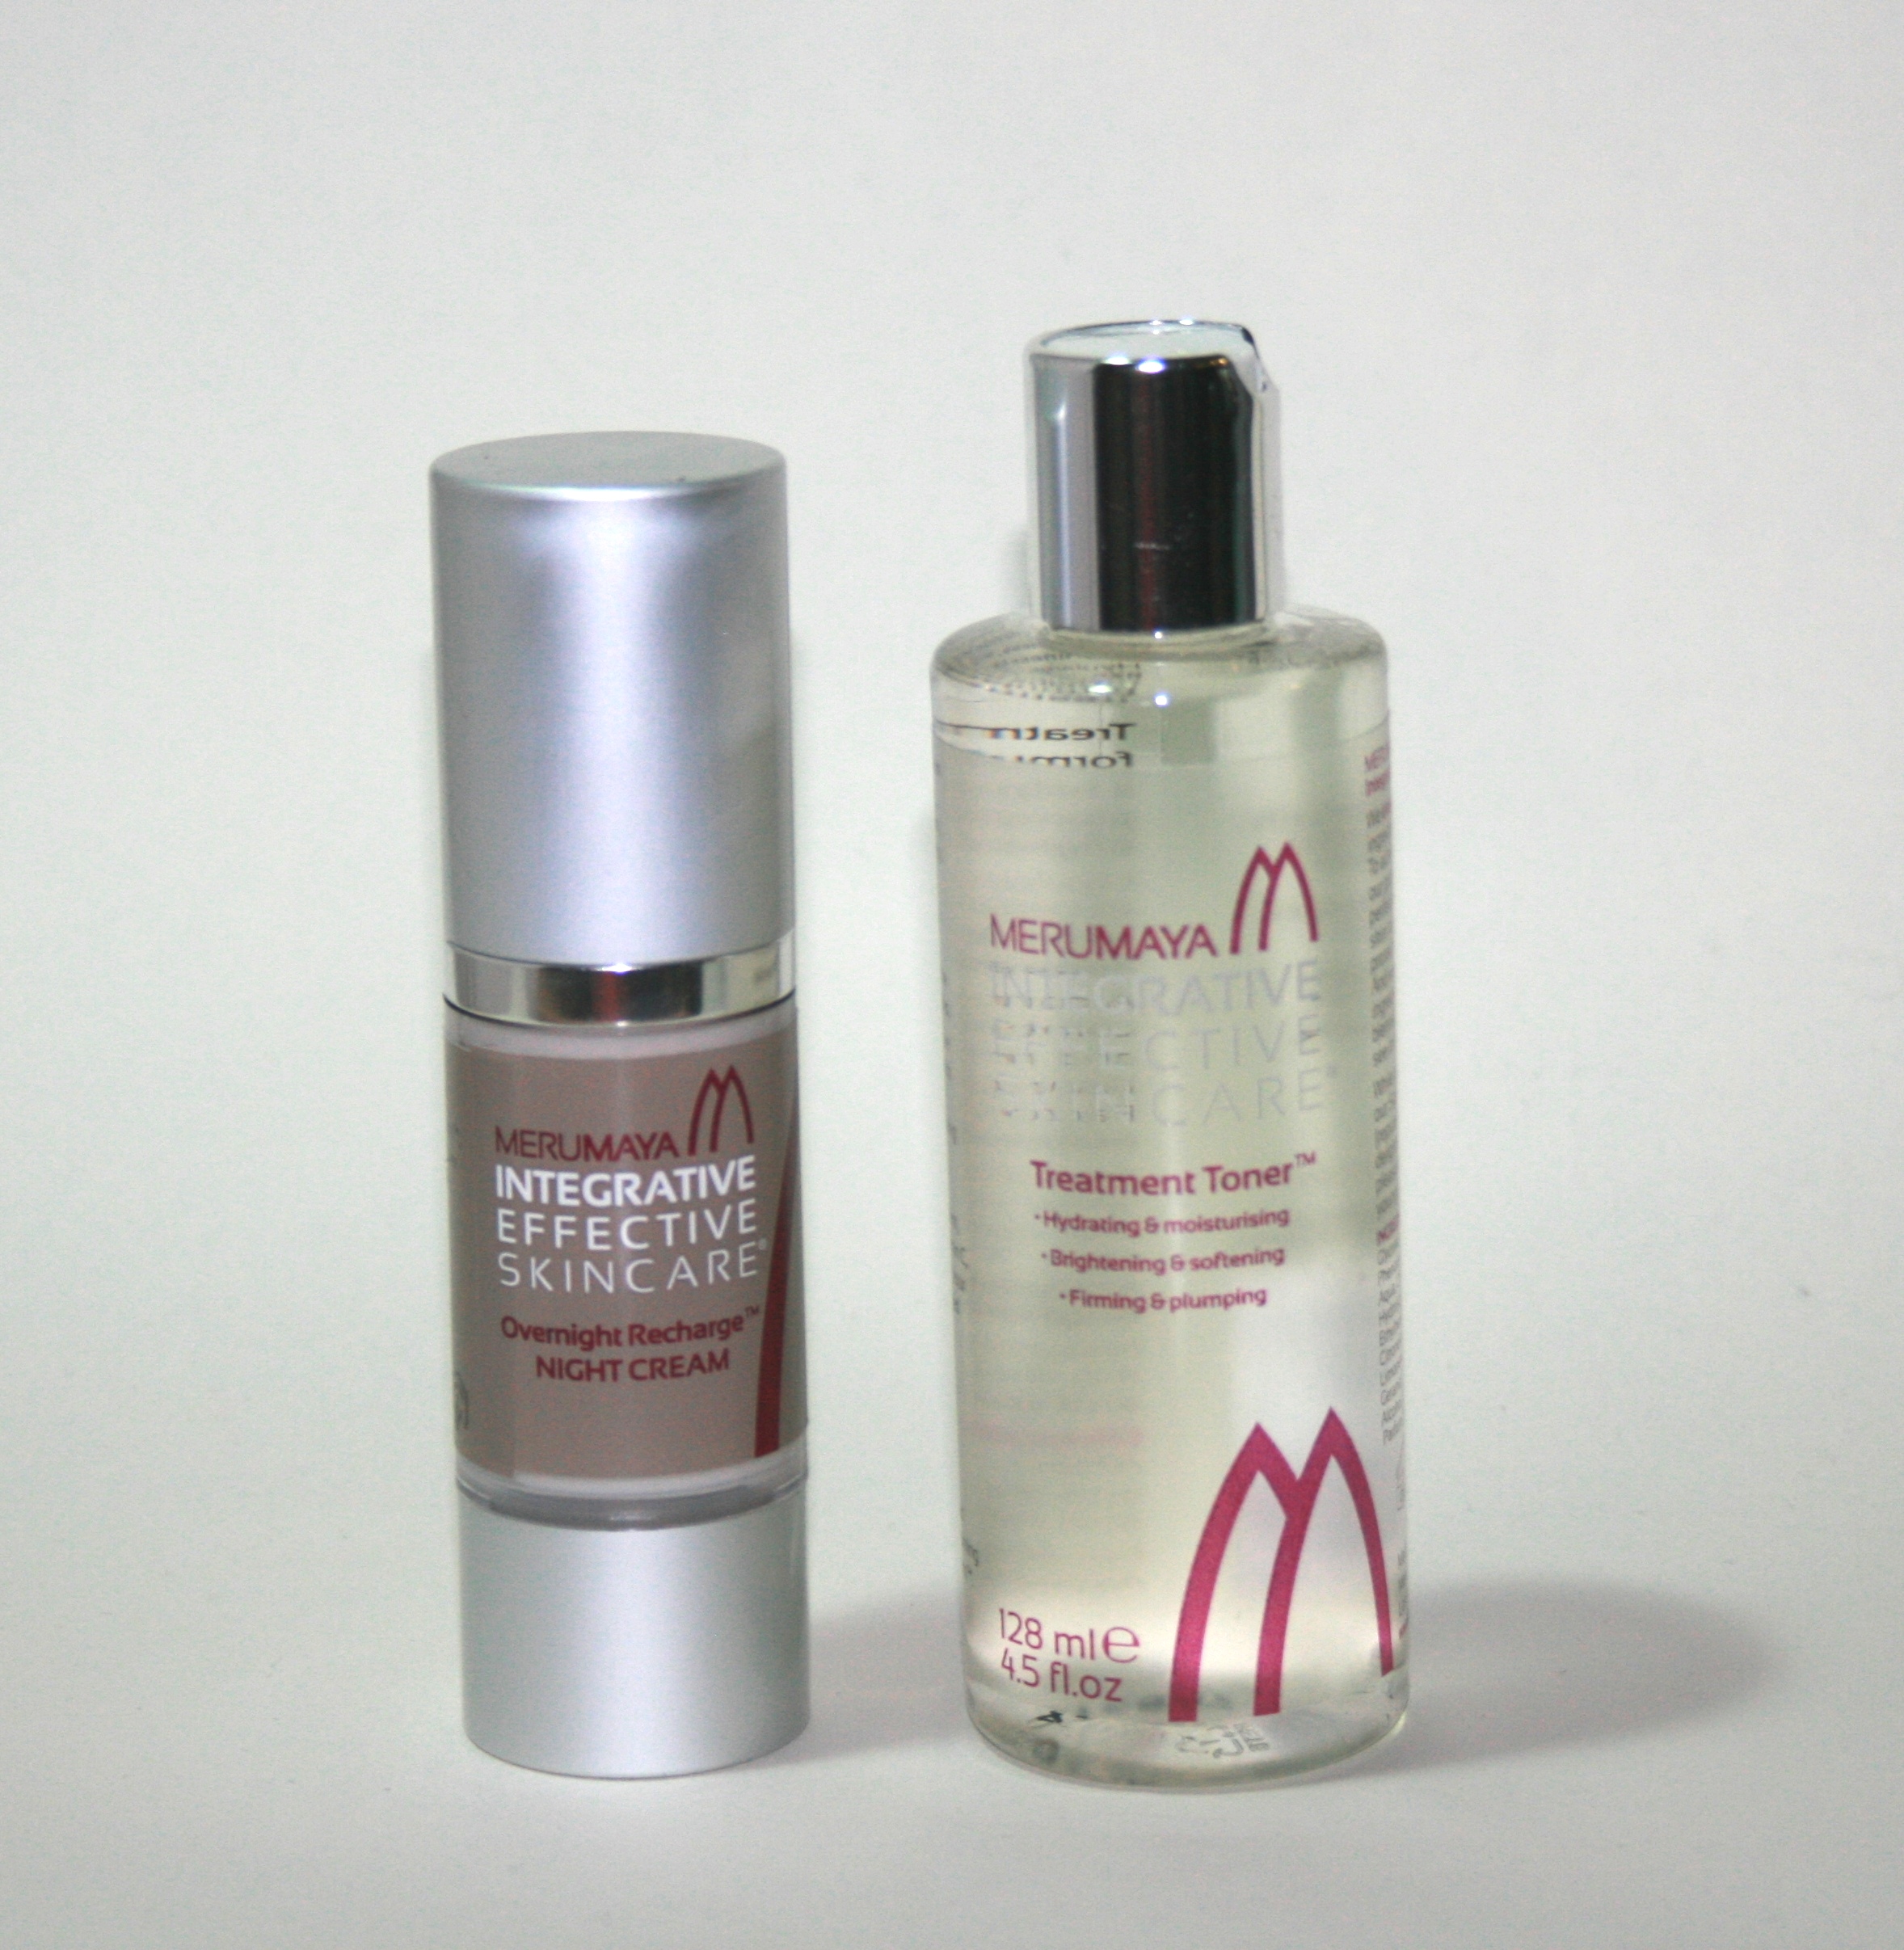 New from Merumaya: Treatment Toner and Overnight Recharge Night Cream